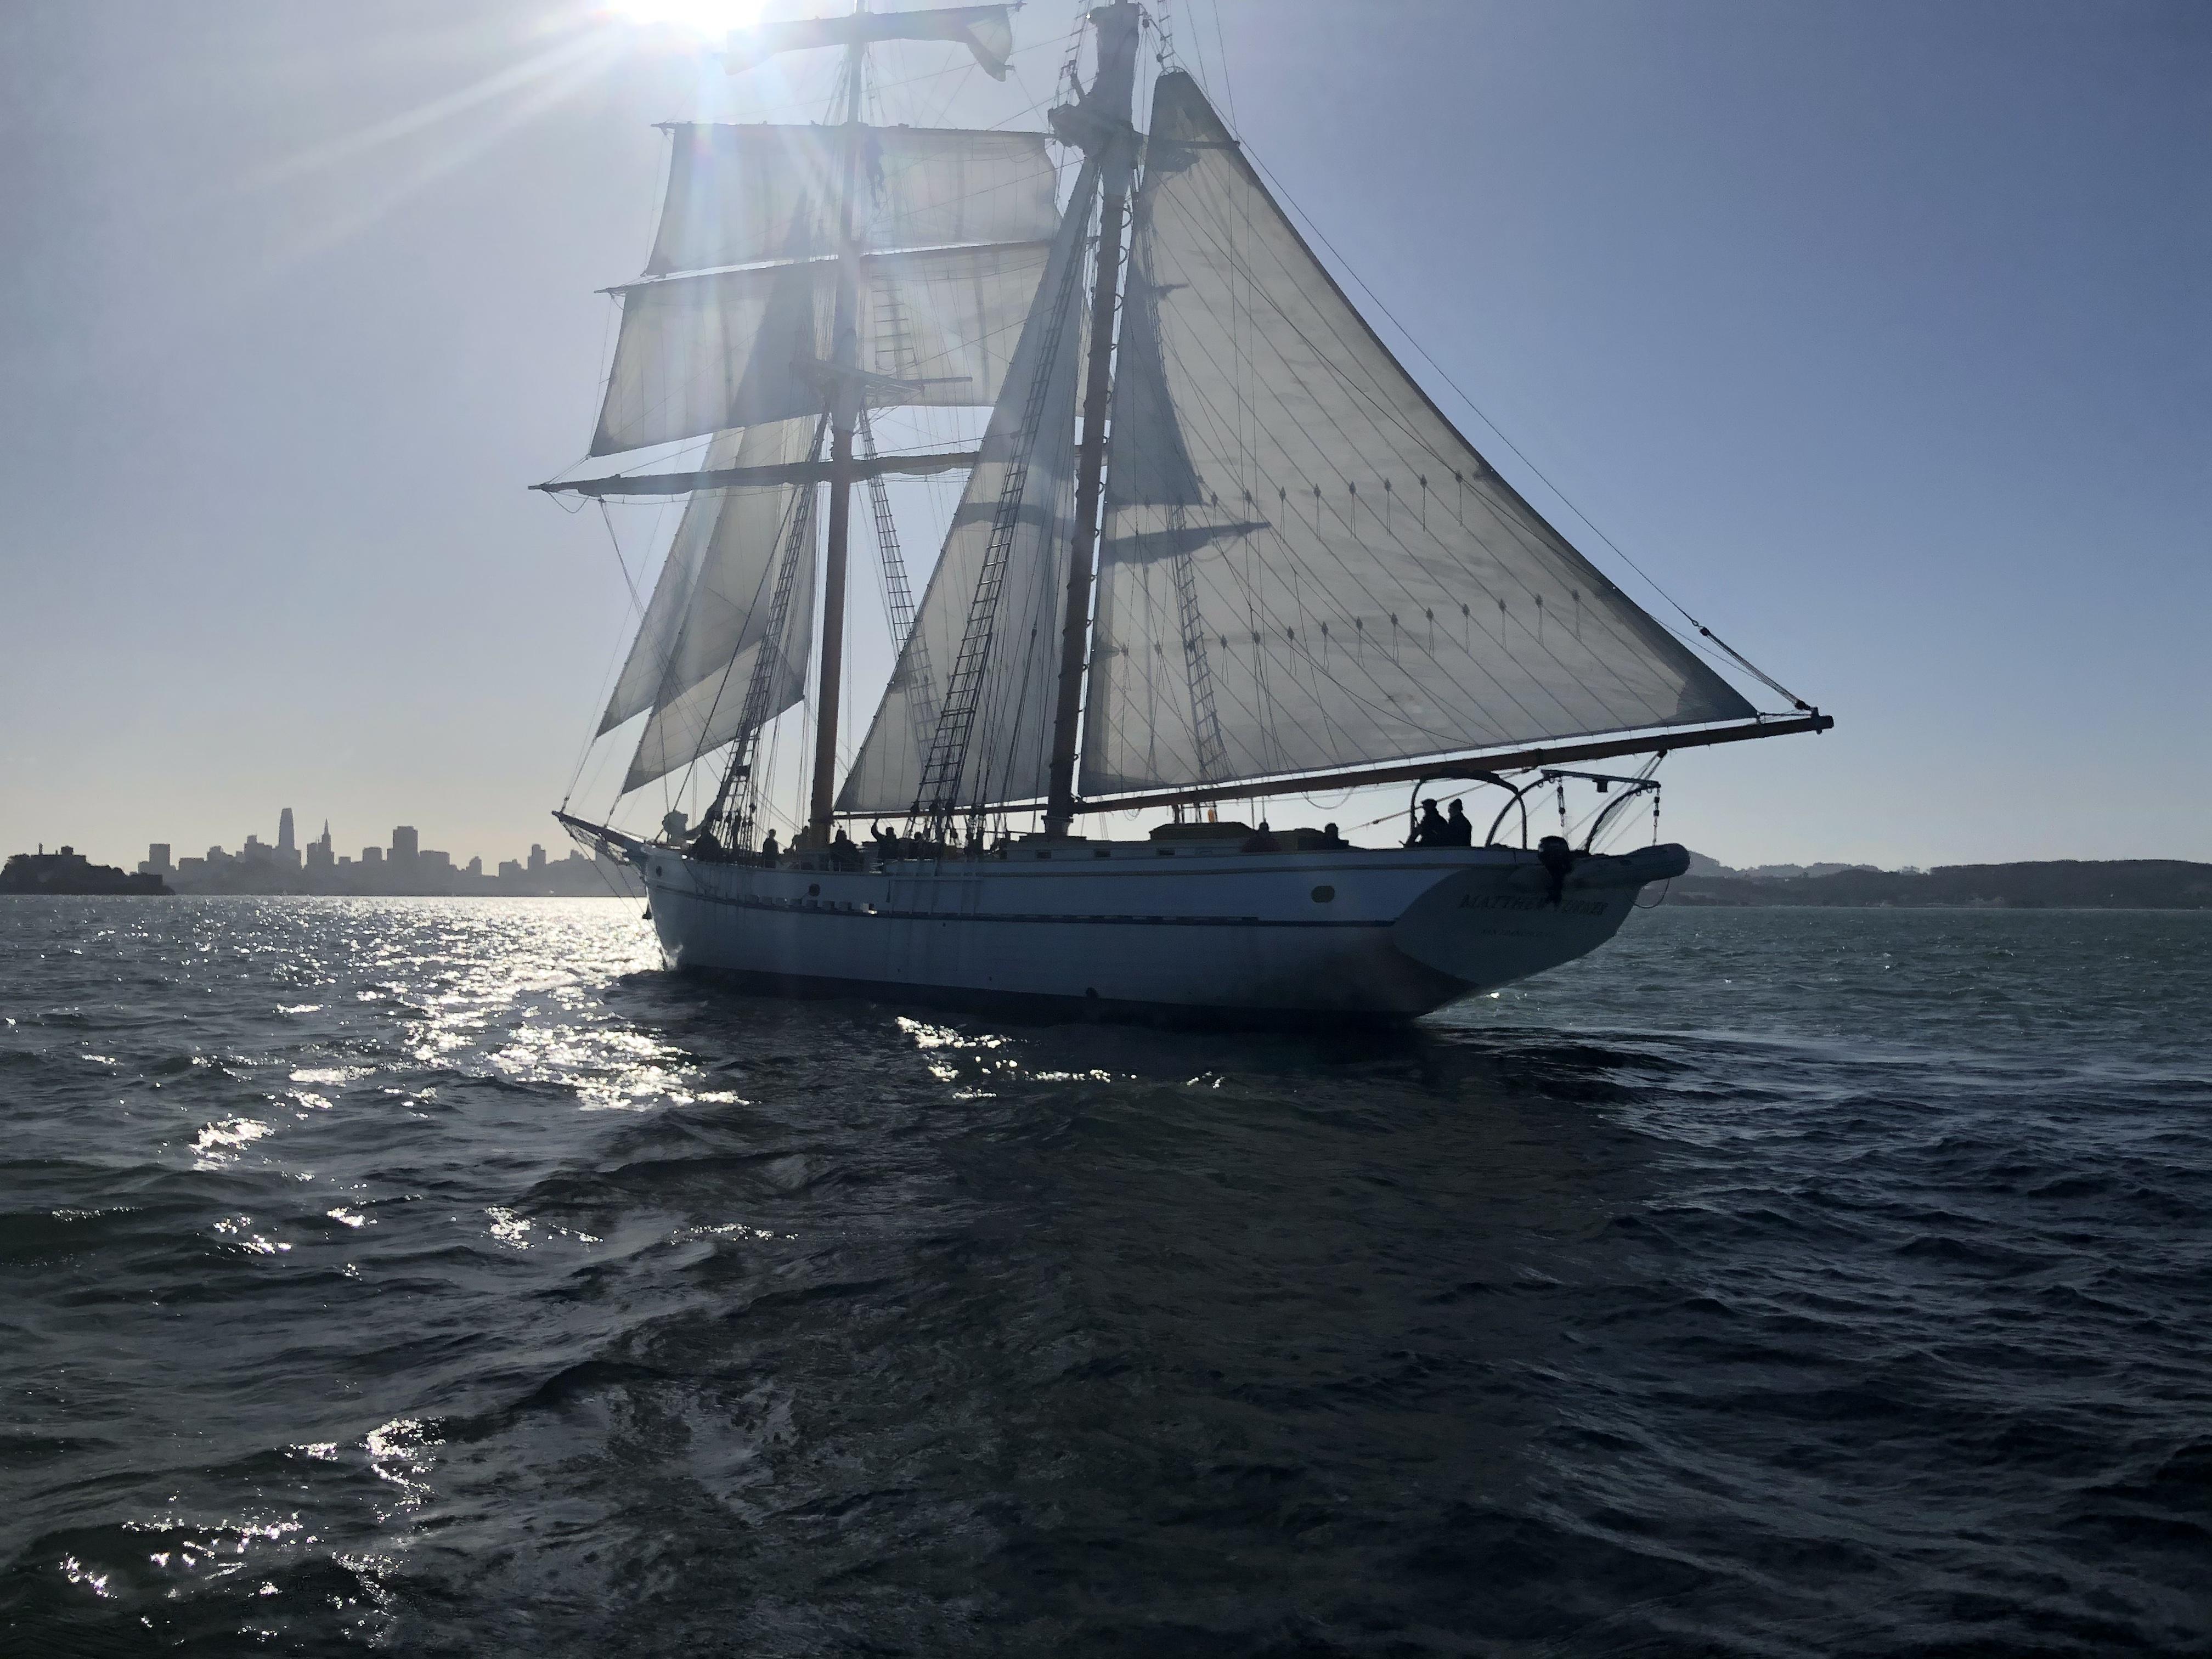 Maritime Heritage and Bay Ecology Saturday Sailing Adventure aboard brigantine Matthew Turner